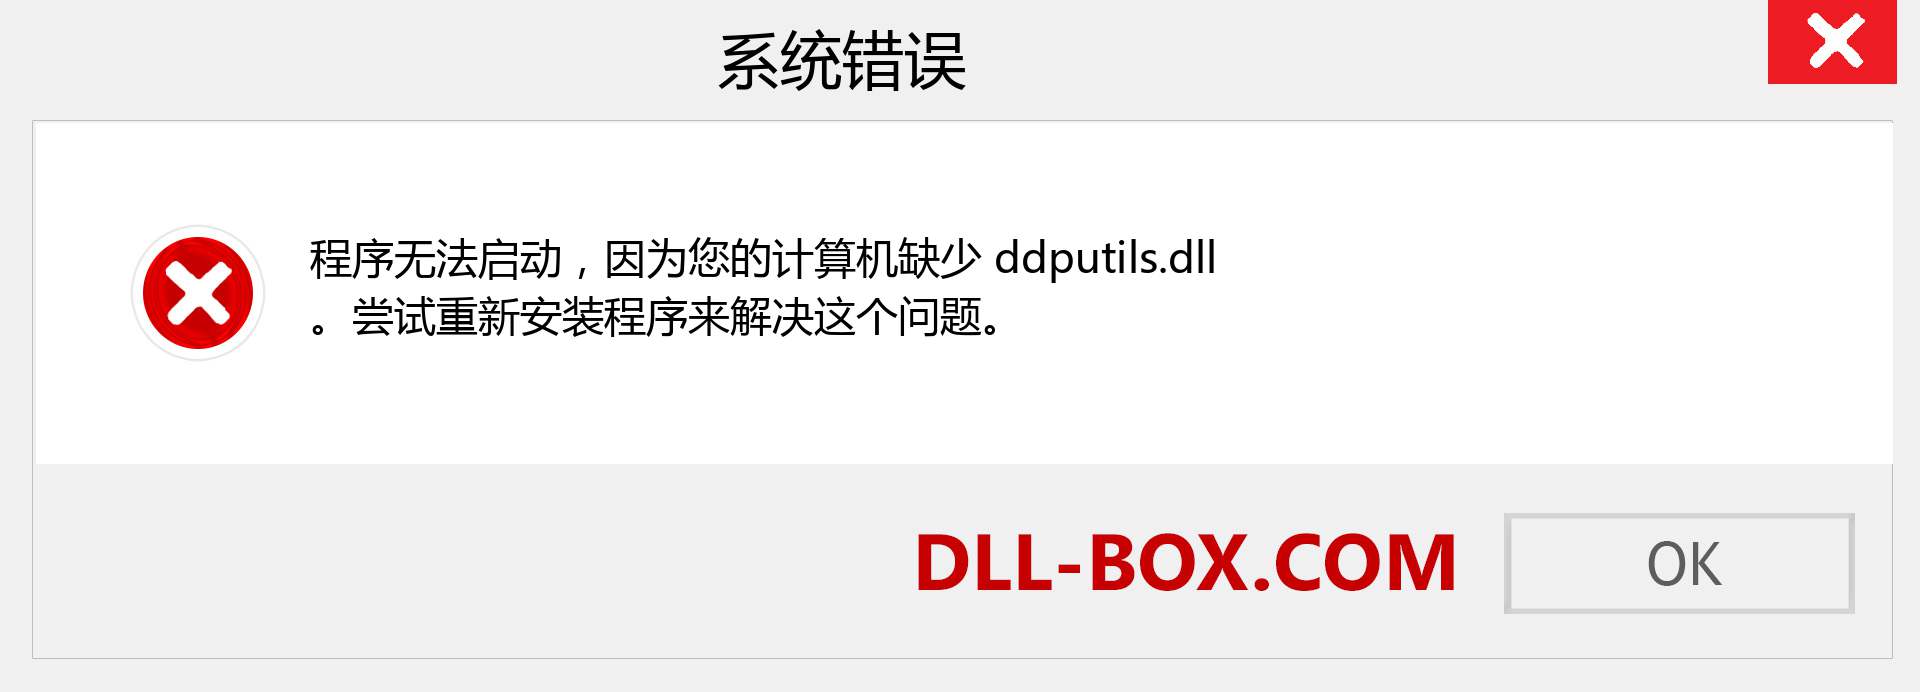 ddputils.dll 文件丢失？。 适用于 Windows 7、8、10 的下载 - 修复 Windows、照片、图像上的 ddputils dll 丢失错误